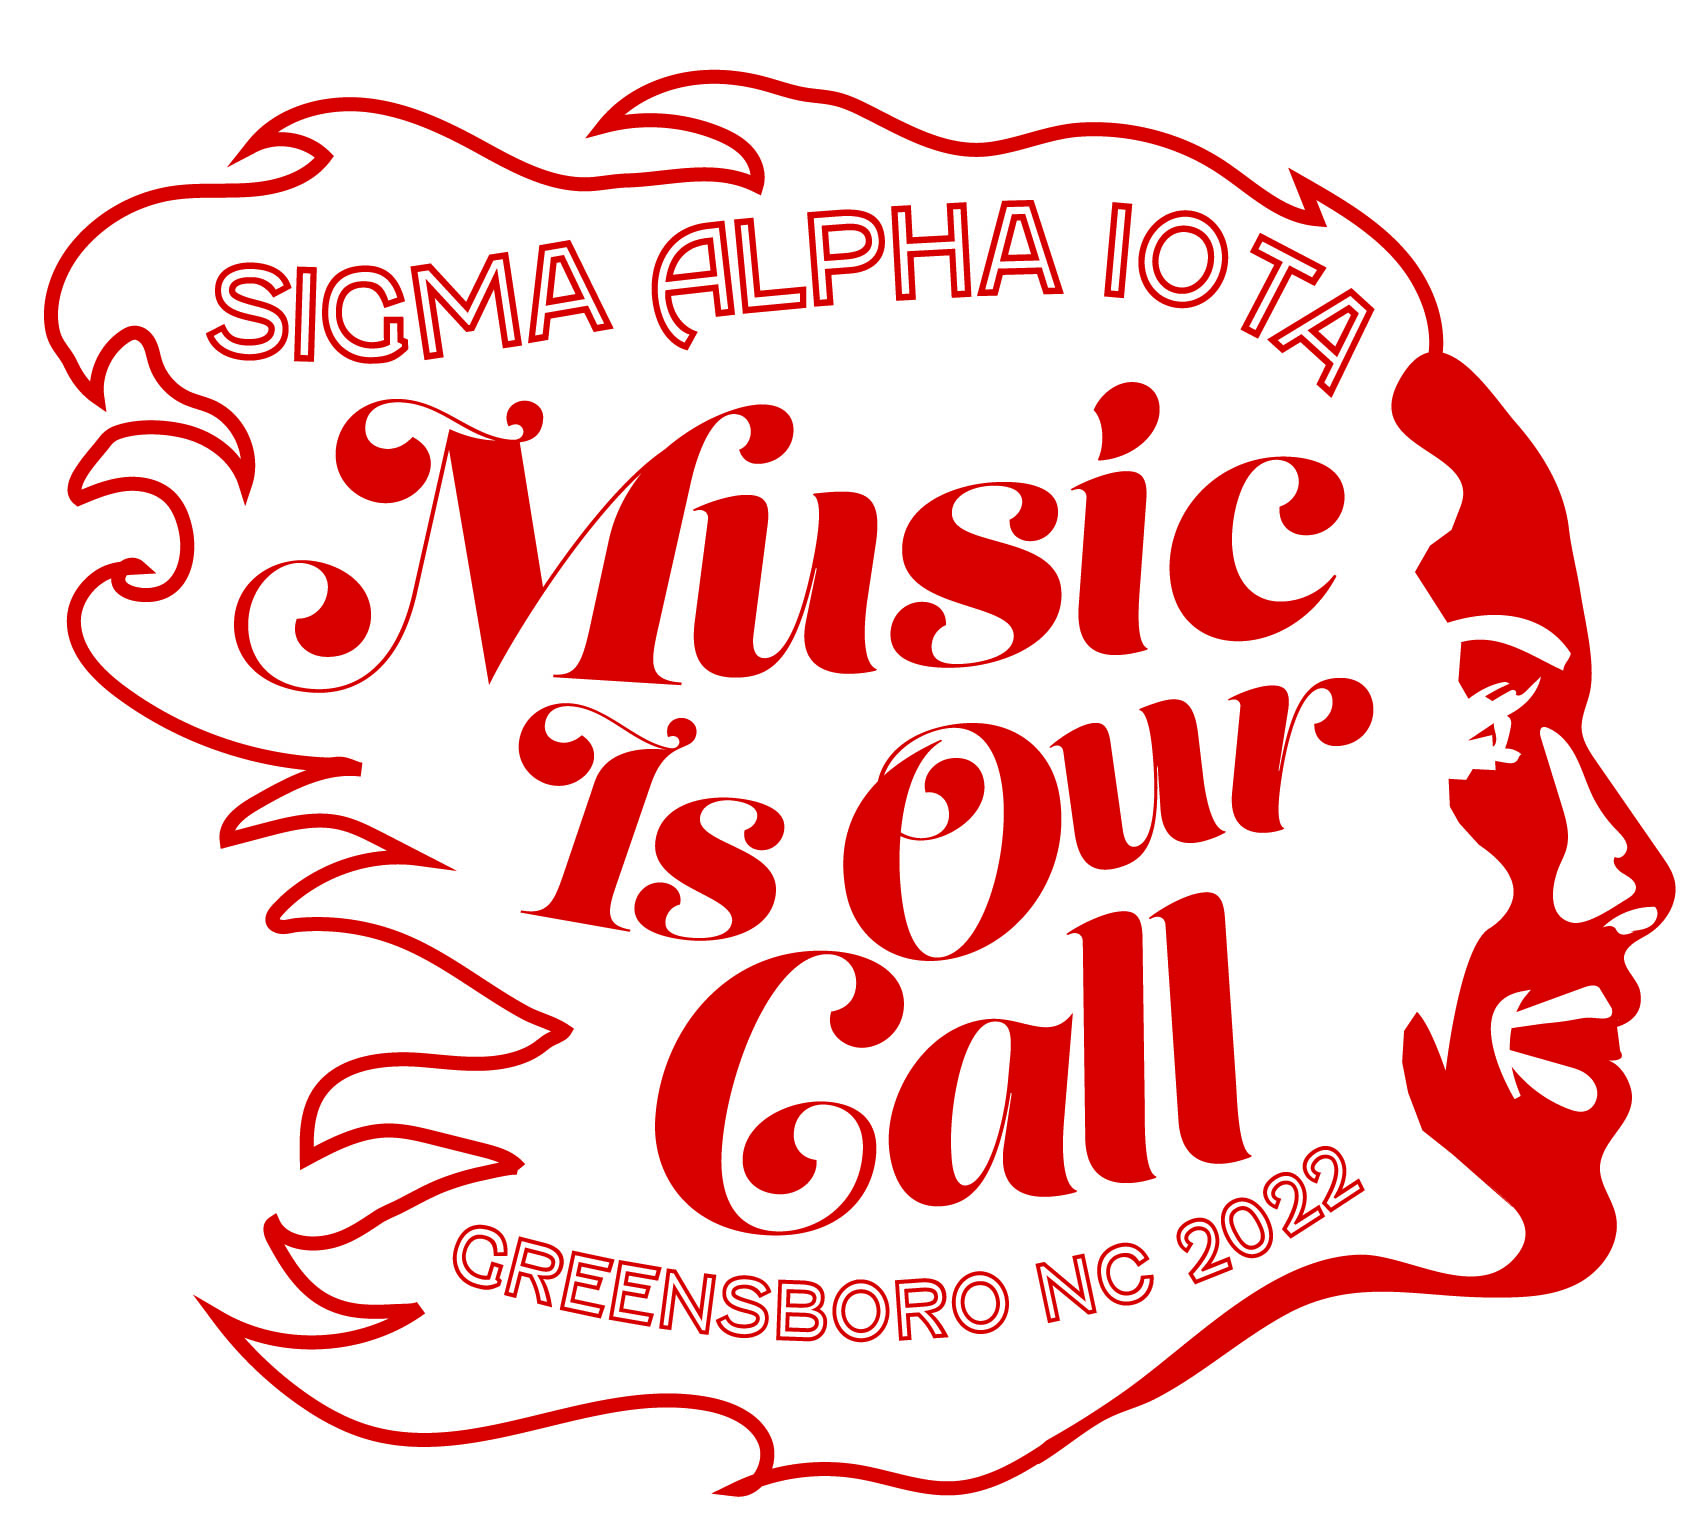 SAI Graphics - Sigma Alpha Iota International Music Fraternity